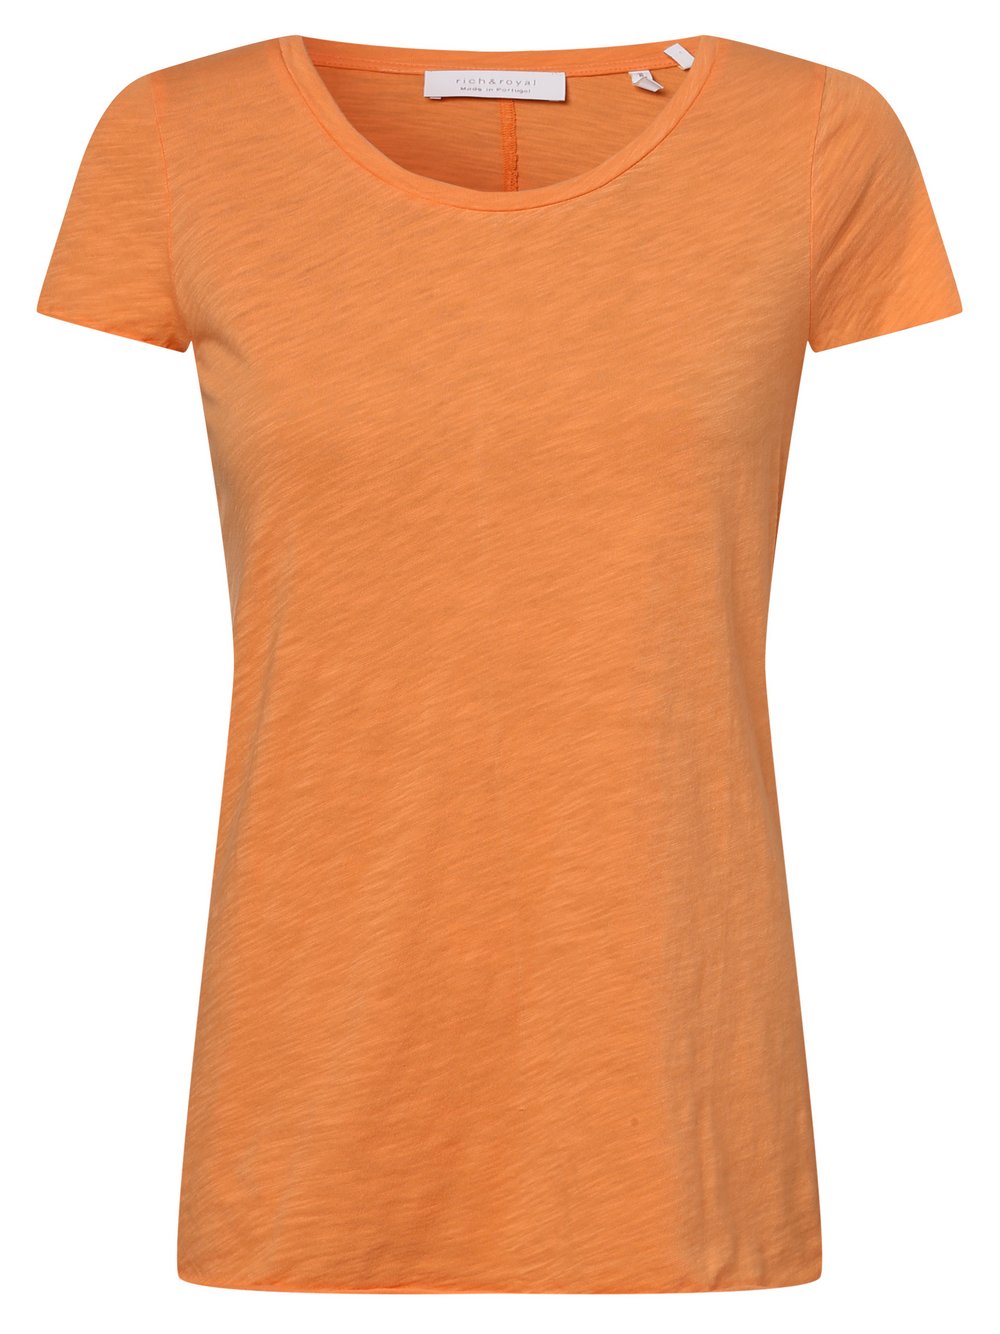 Rich & Royal - T-shirt damski, pomarańczowy